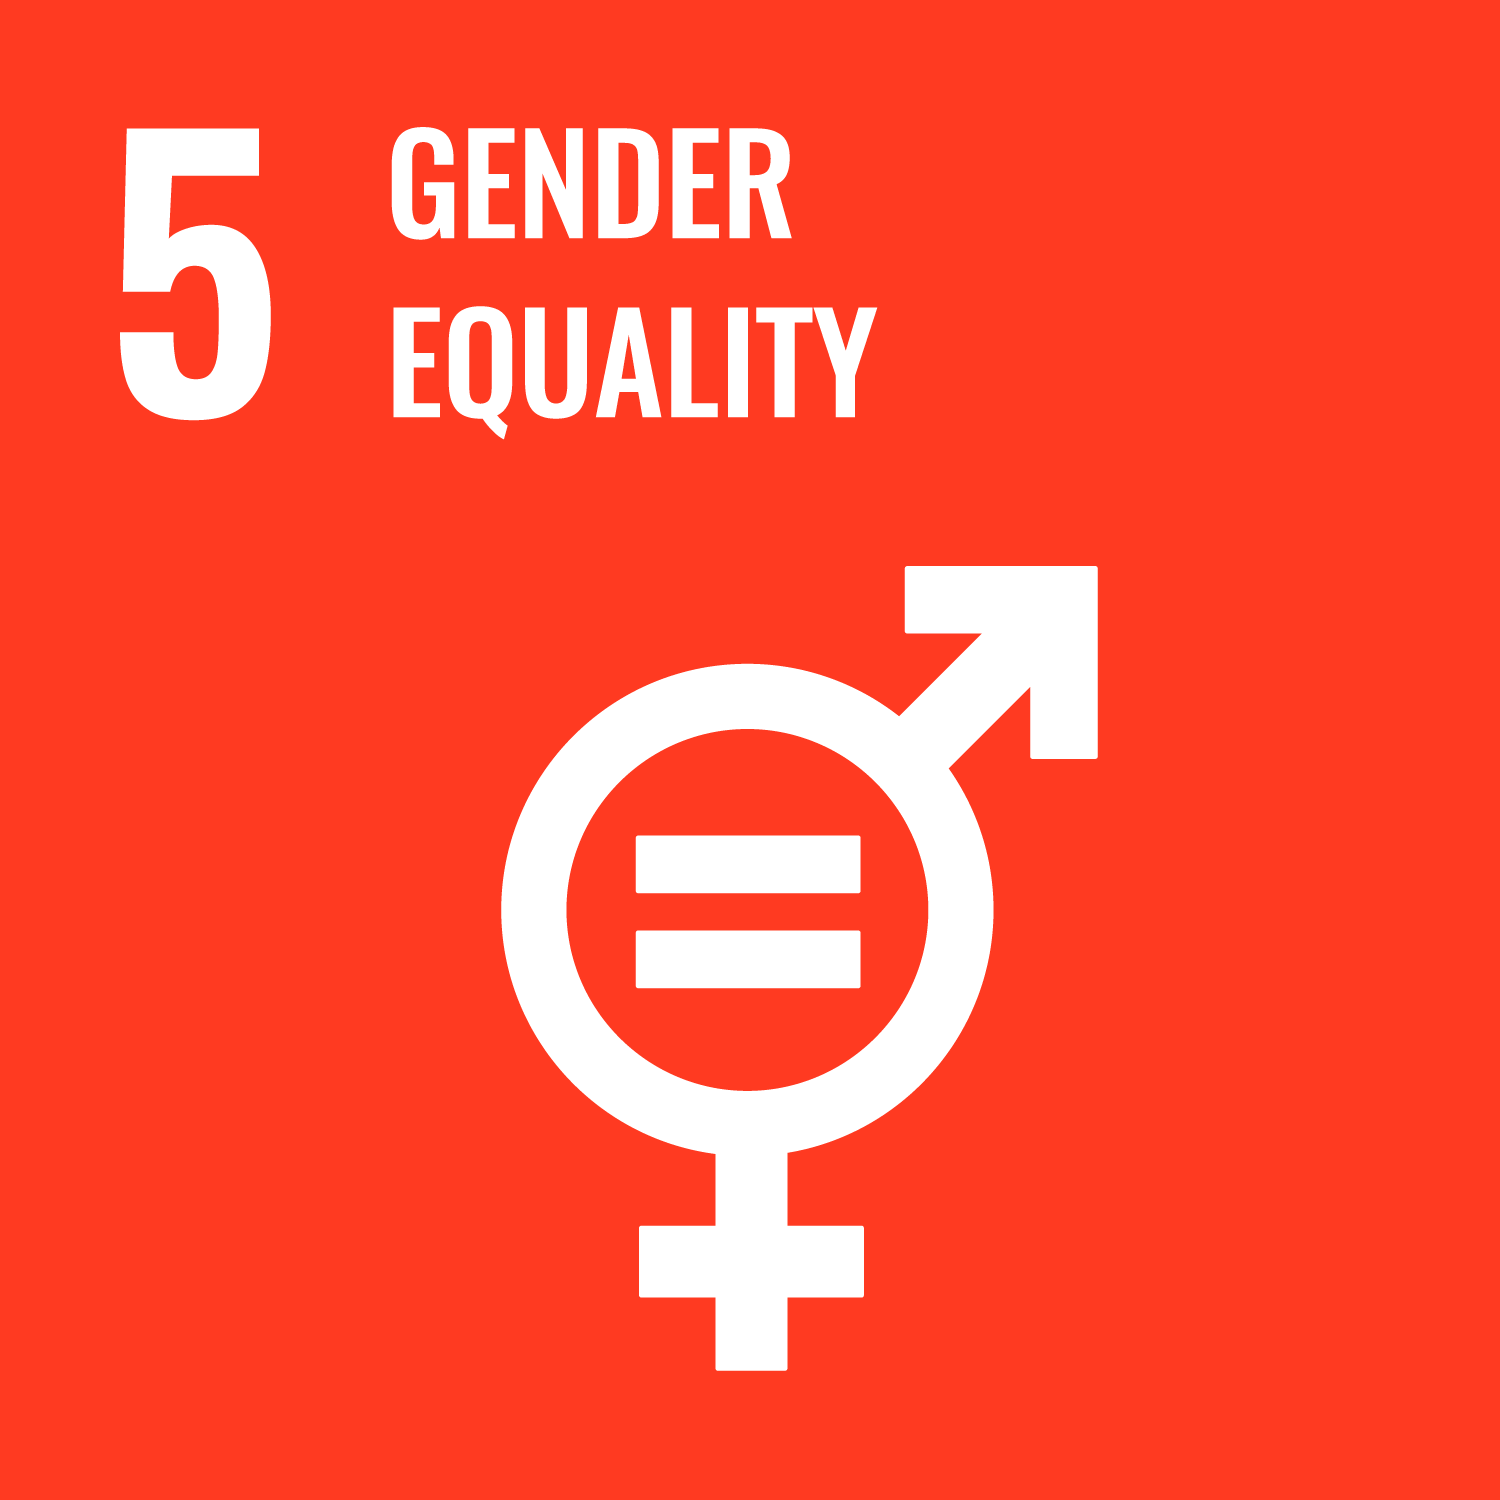 United Nation's 17 Sustainable Development Goals: Goal Number 5: Gender Equality